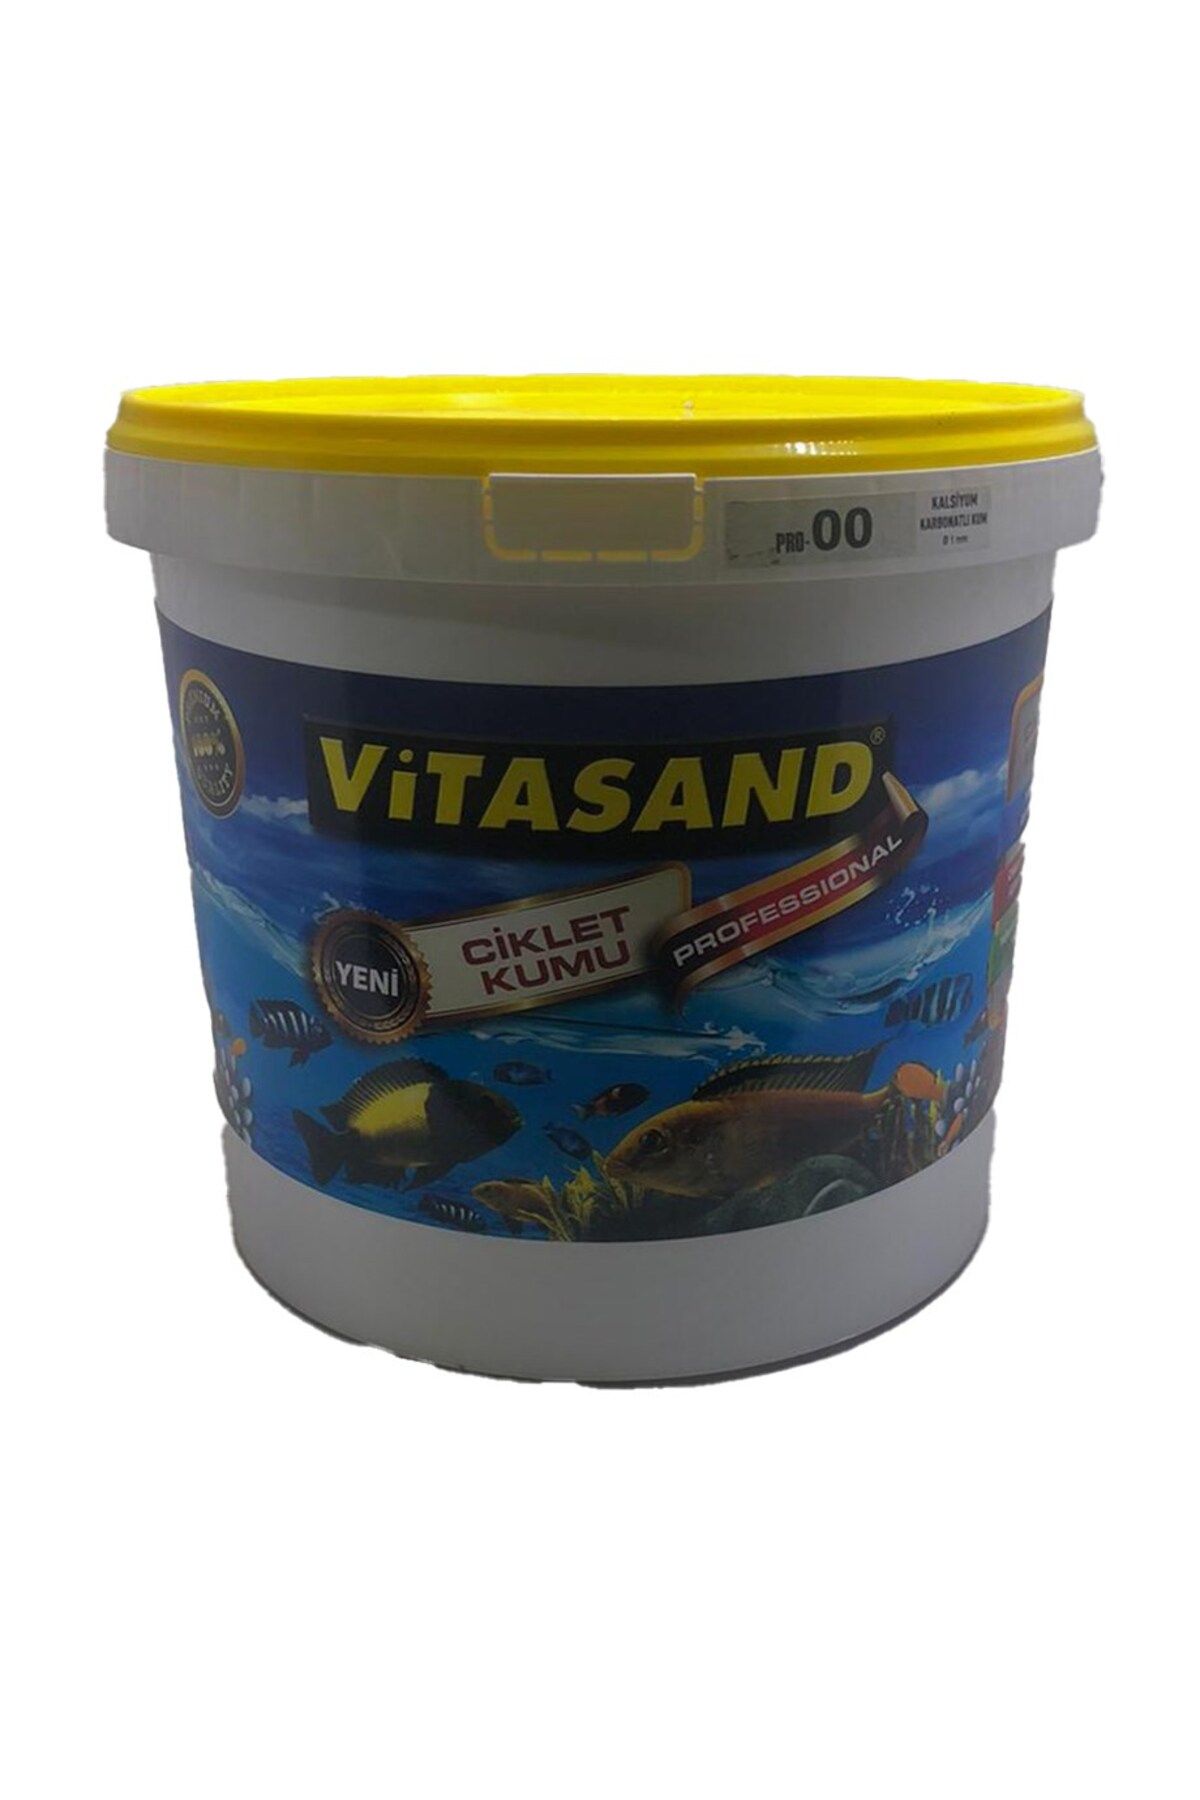 Vitasand Kalsiyum Karbonatlı Ciklet Kumu Pro-00 Ince 0,1mm 20 Kg